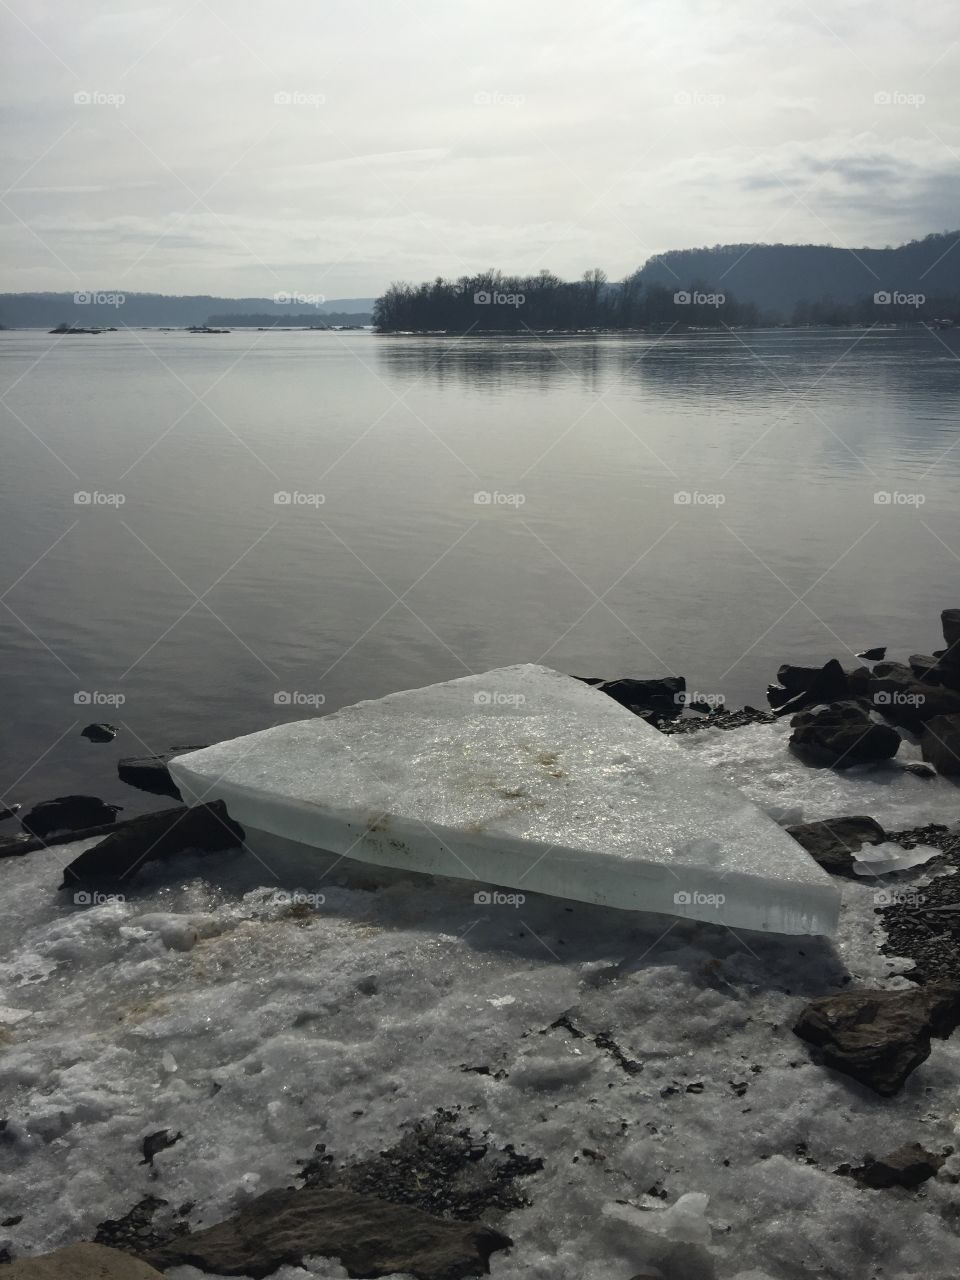 Huge chunk of ice looks like my getaway raft